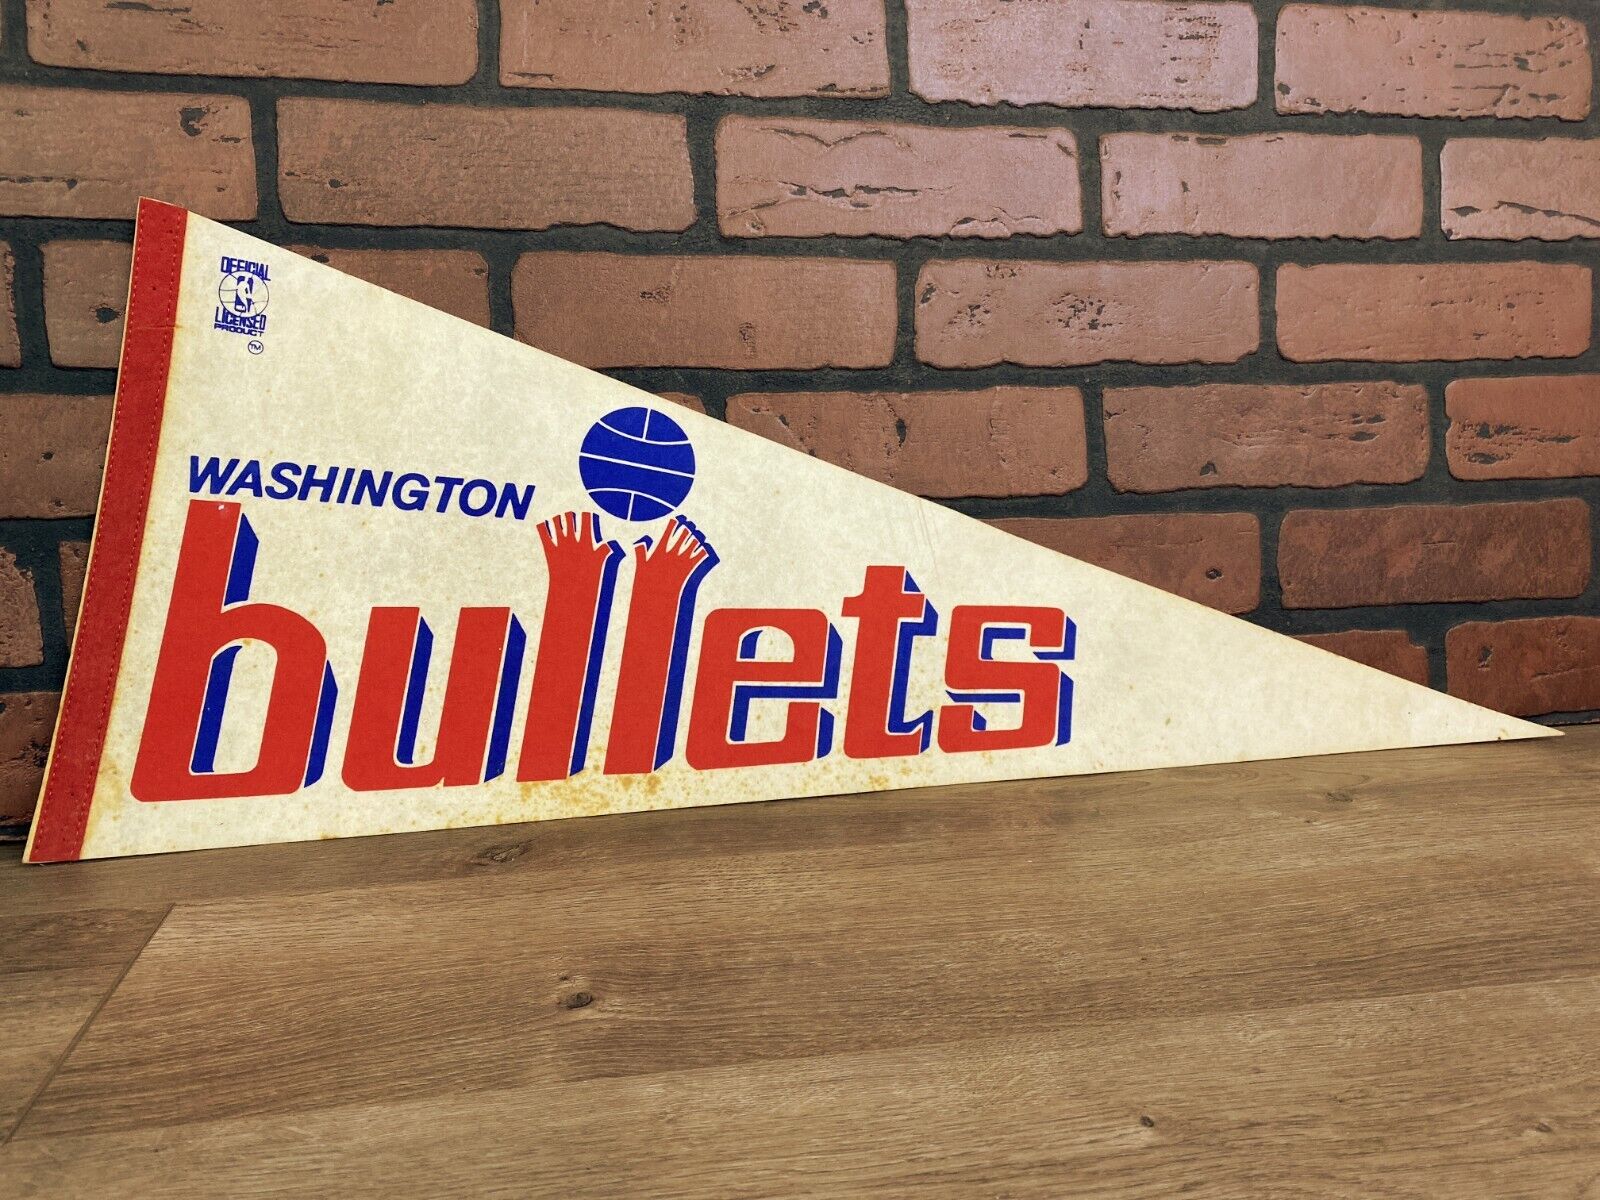 Authentic Vintage Felt Pennant - Washington Bullets NBA